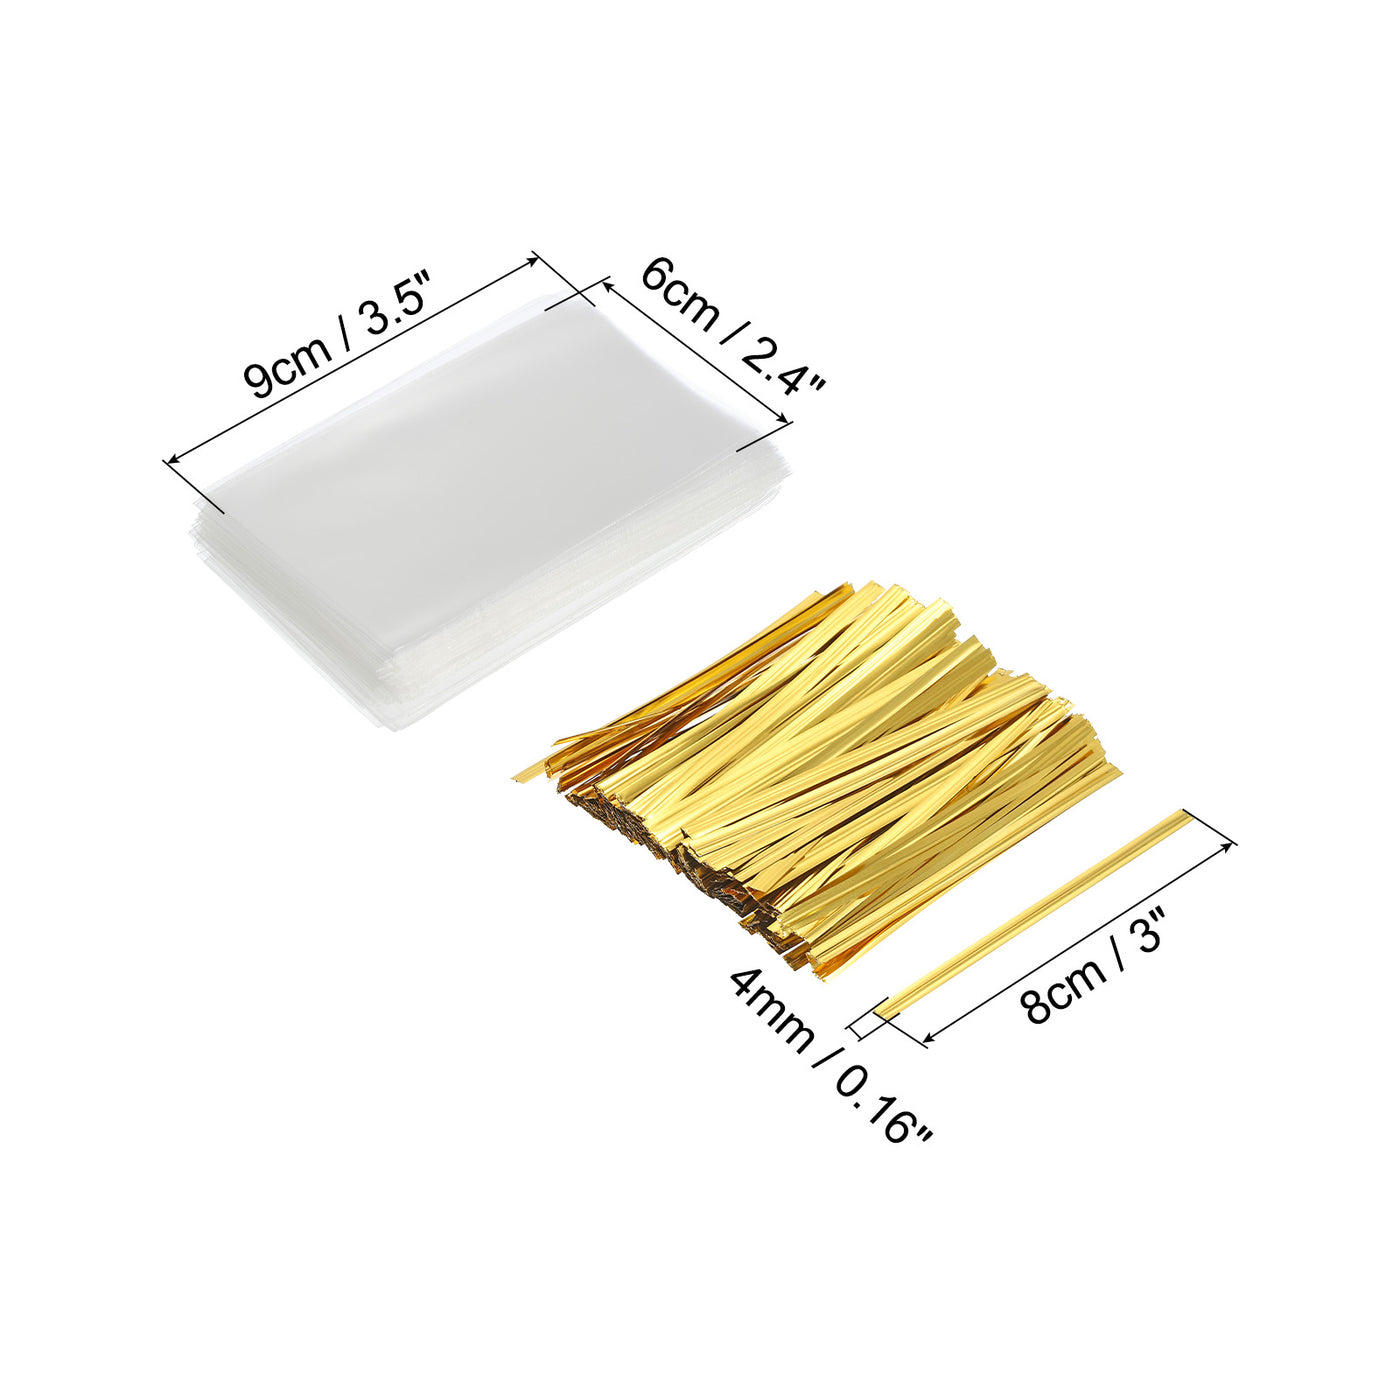 Harfington Clear Plastic Bags 3.5"x2.5" with 3" Foil Twist Ties Gold Tone 100 Set